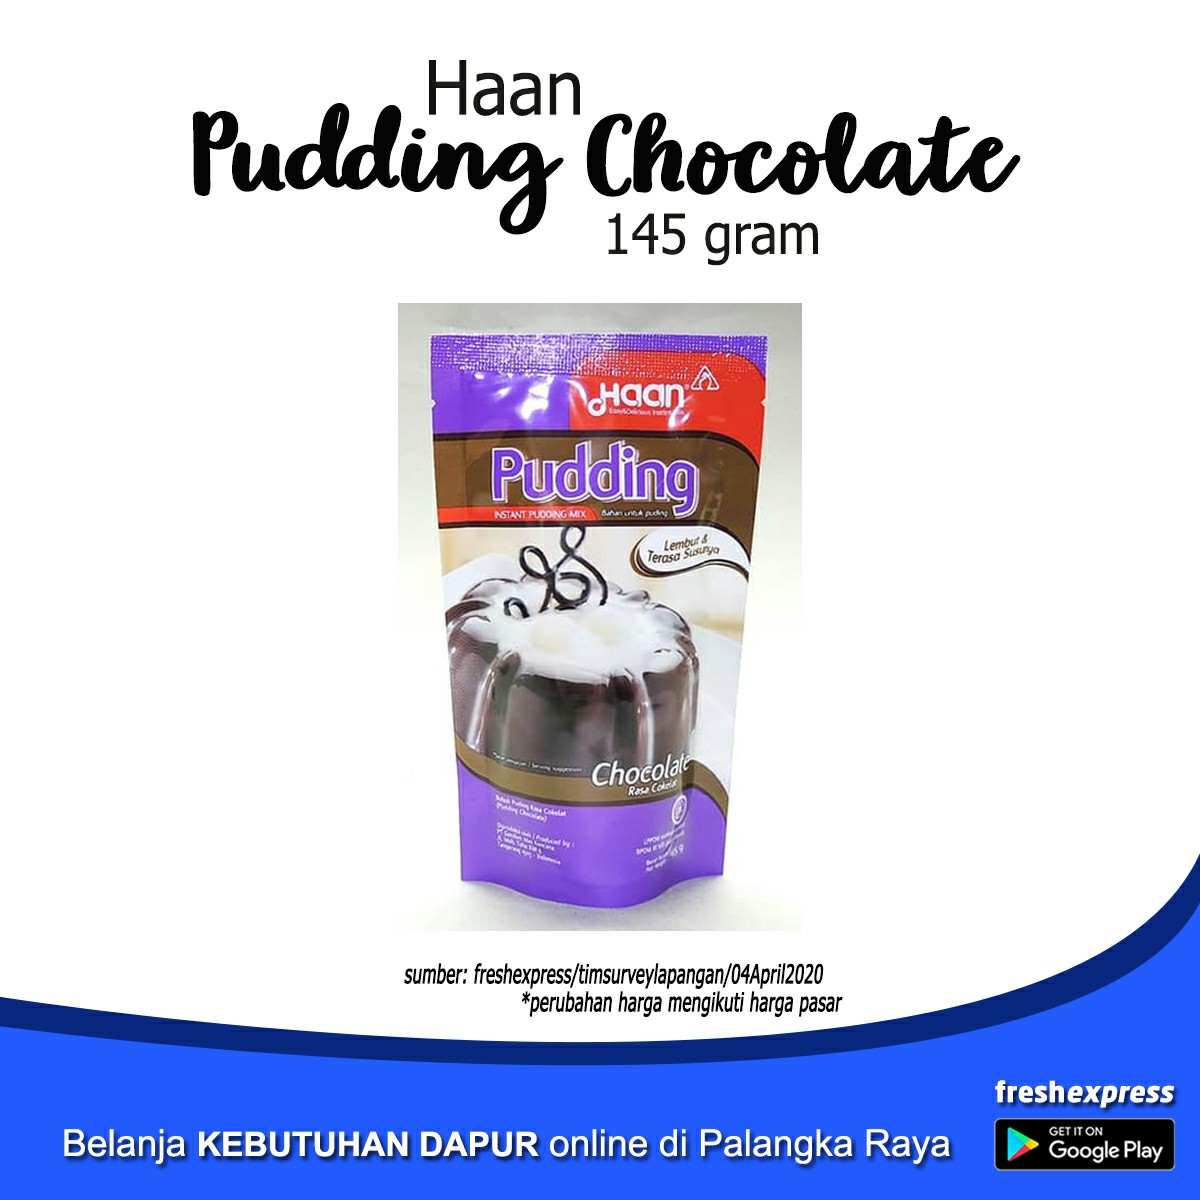 Haan Pudding Chocolate 145